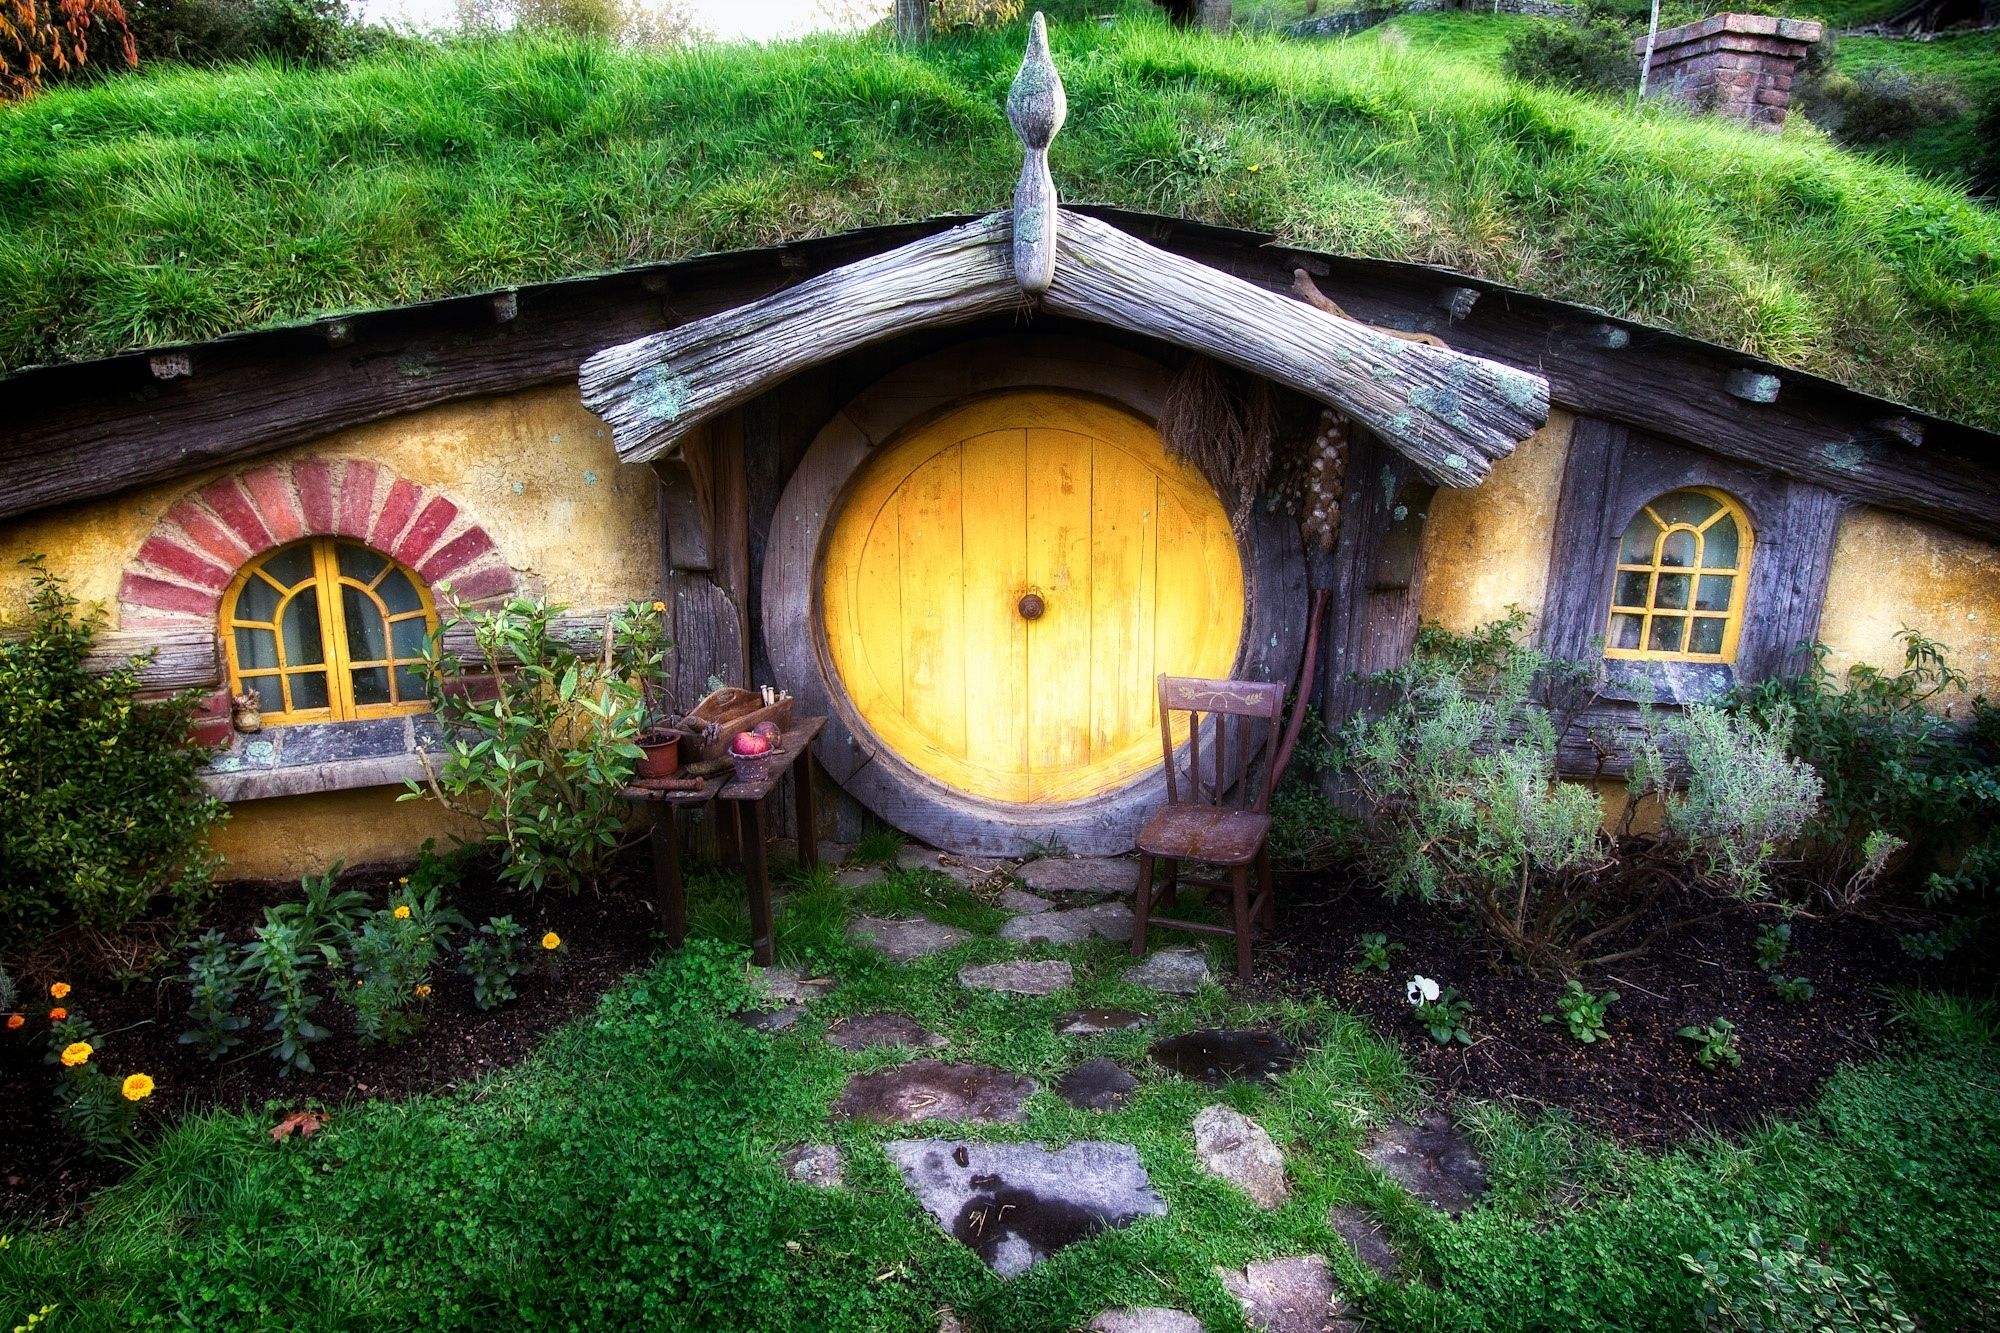 Hobbiton Movie Set Tour - Be Transported to the Shire | Heletranz